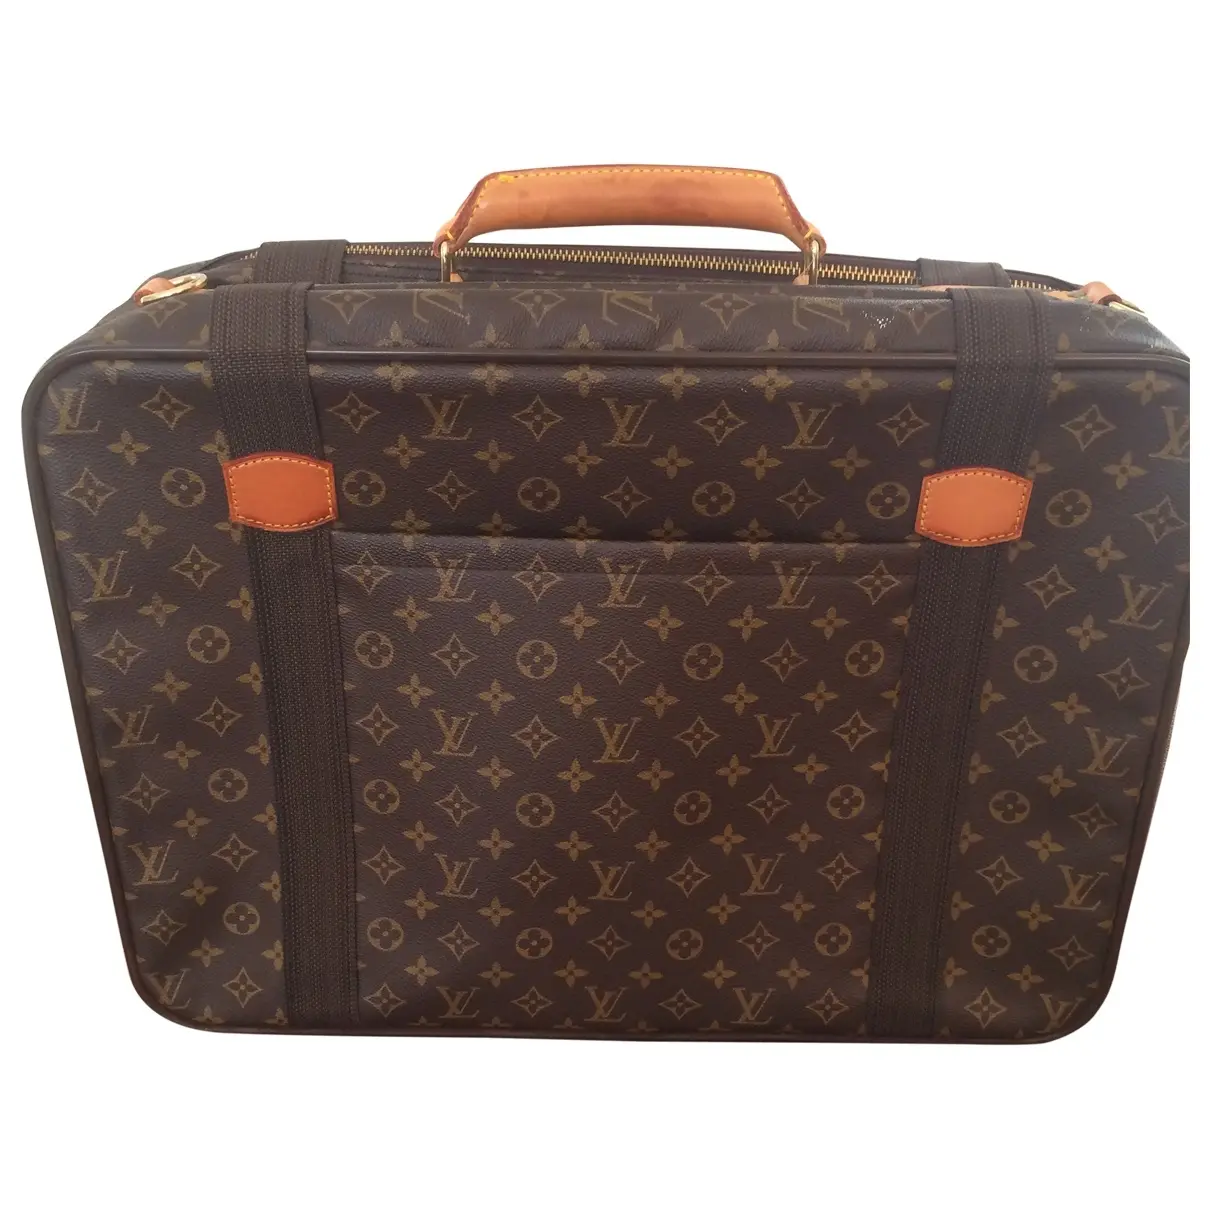 Satellite cloth travel bag Louis Vuitton